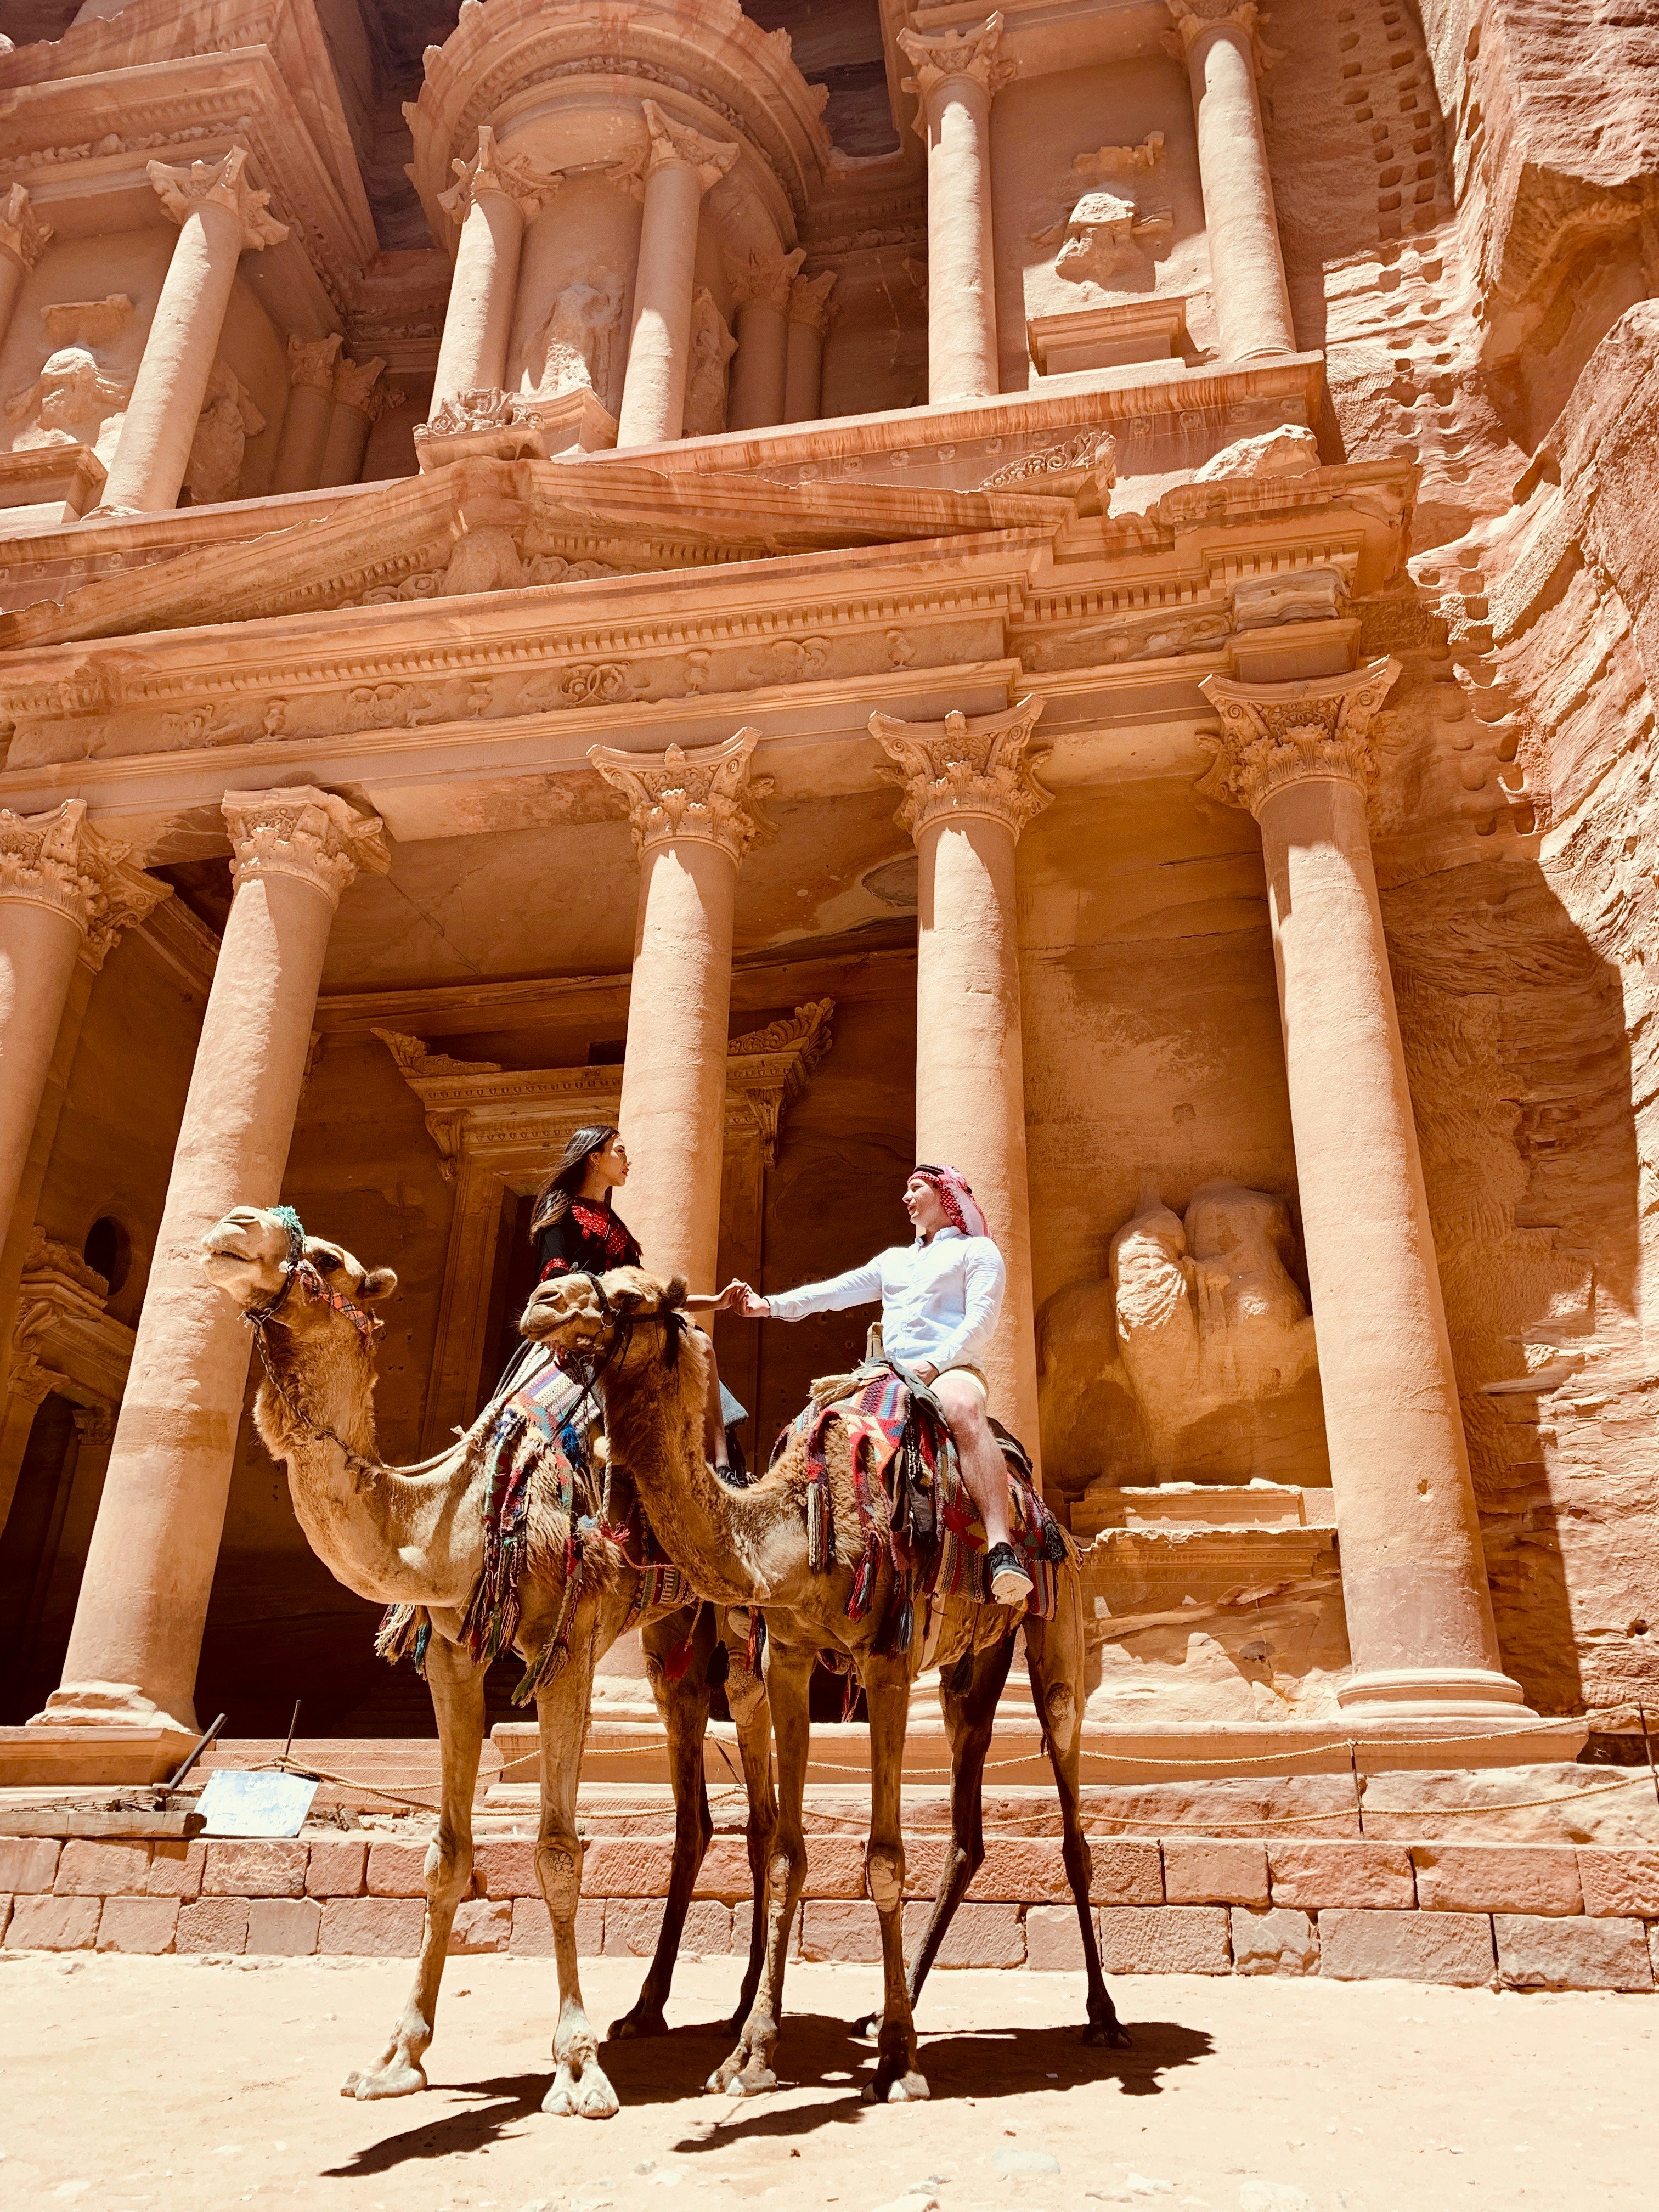 Petra, Jordan: 7th Wonder of the World 👉🏻 Please credit my website: GlobalCareerBook.com 👈🏻